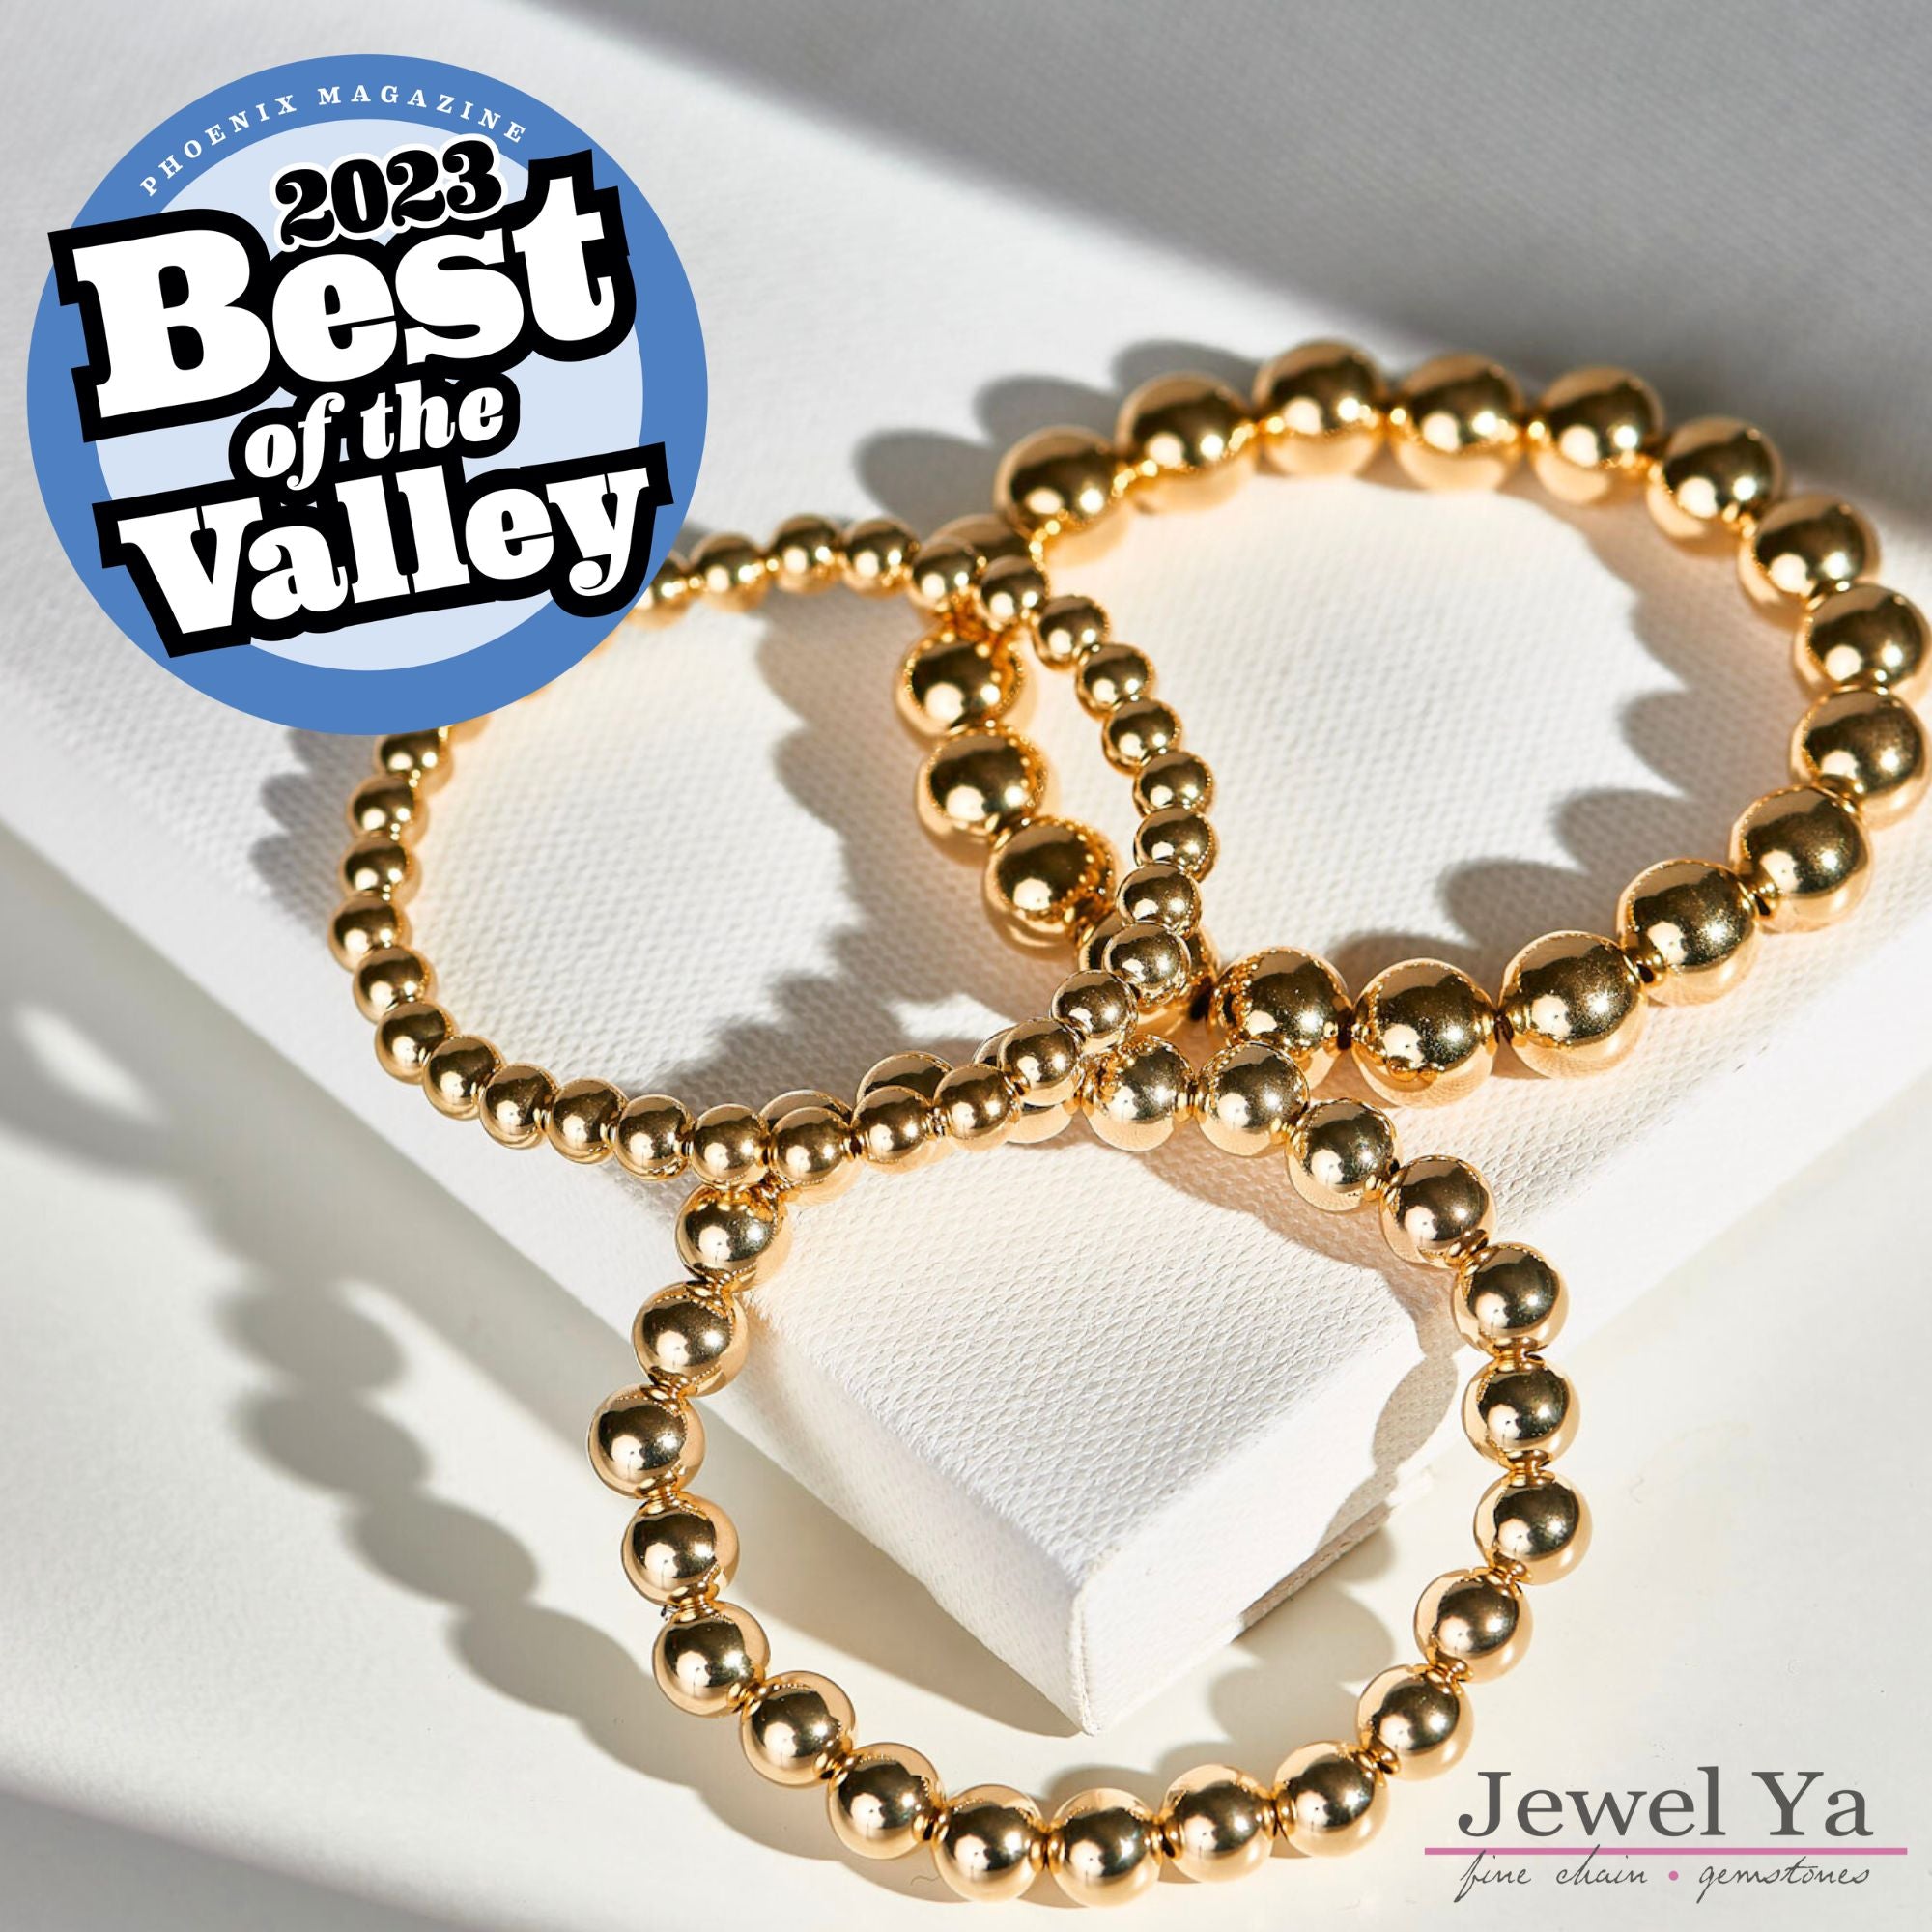 6mm Sterling Silver & 14k Gold Filled Bracelet - Jewel Ya